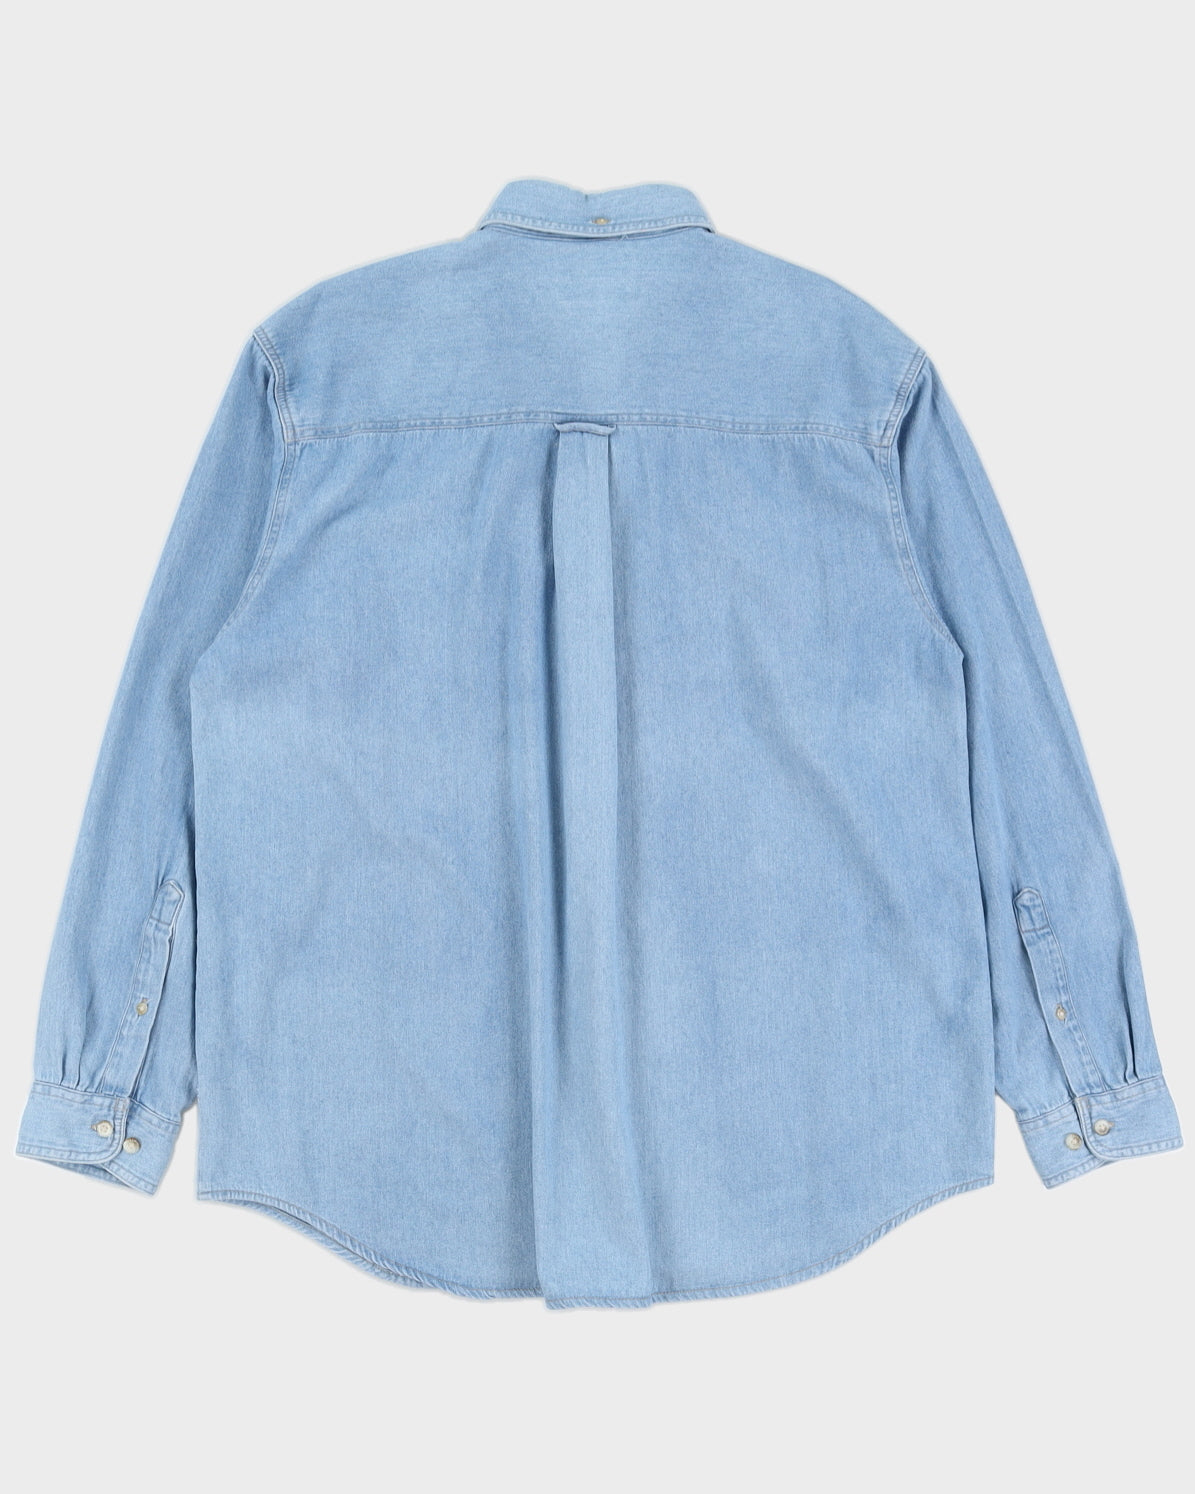 Vintage 90s Columbia Blue Denim Long Sleeved Shirt - L